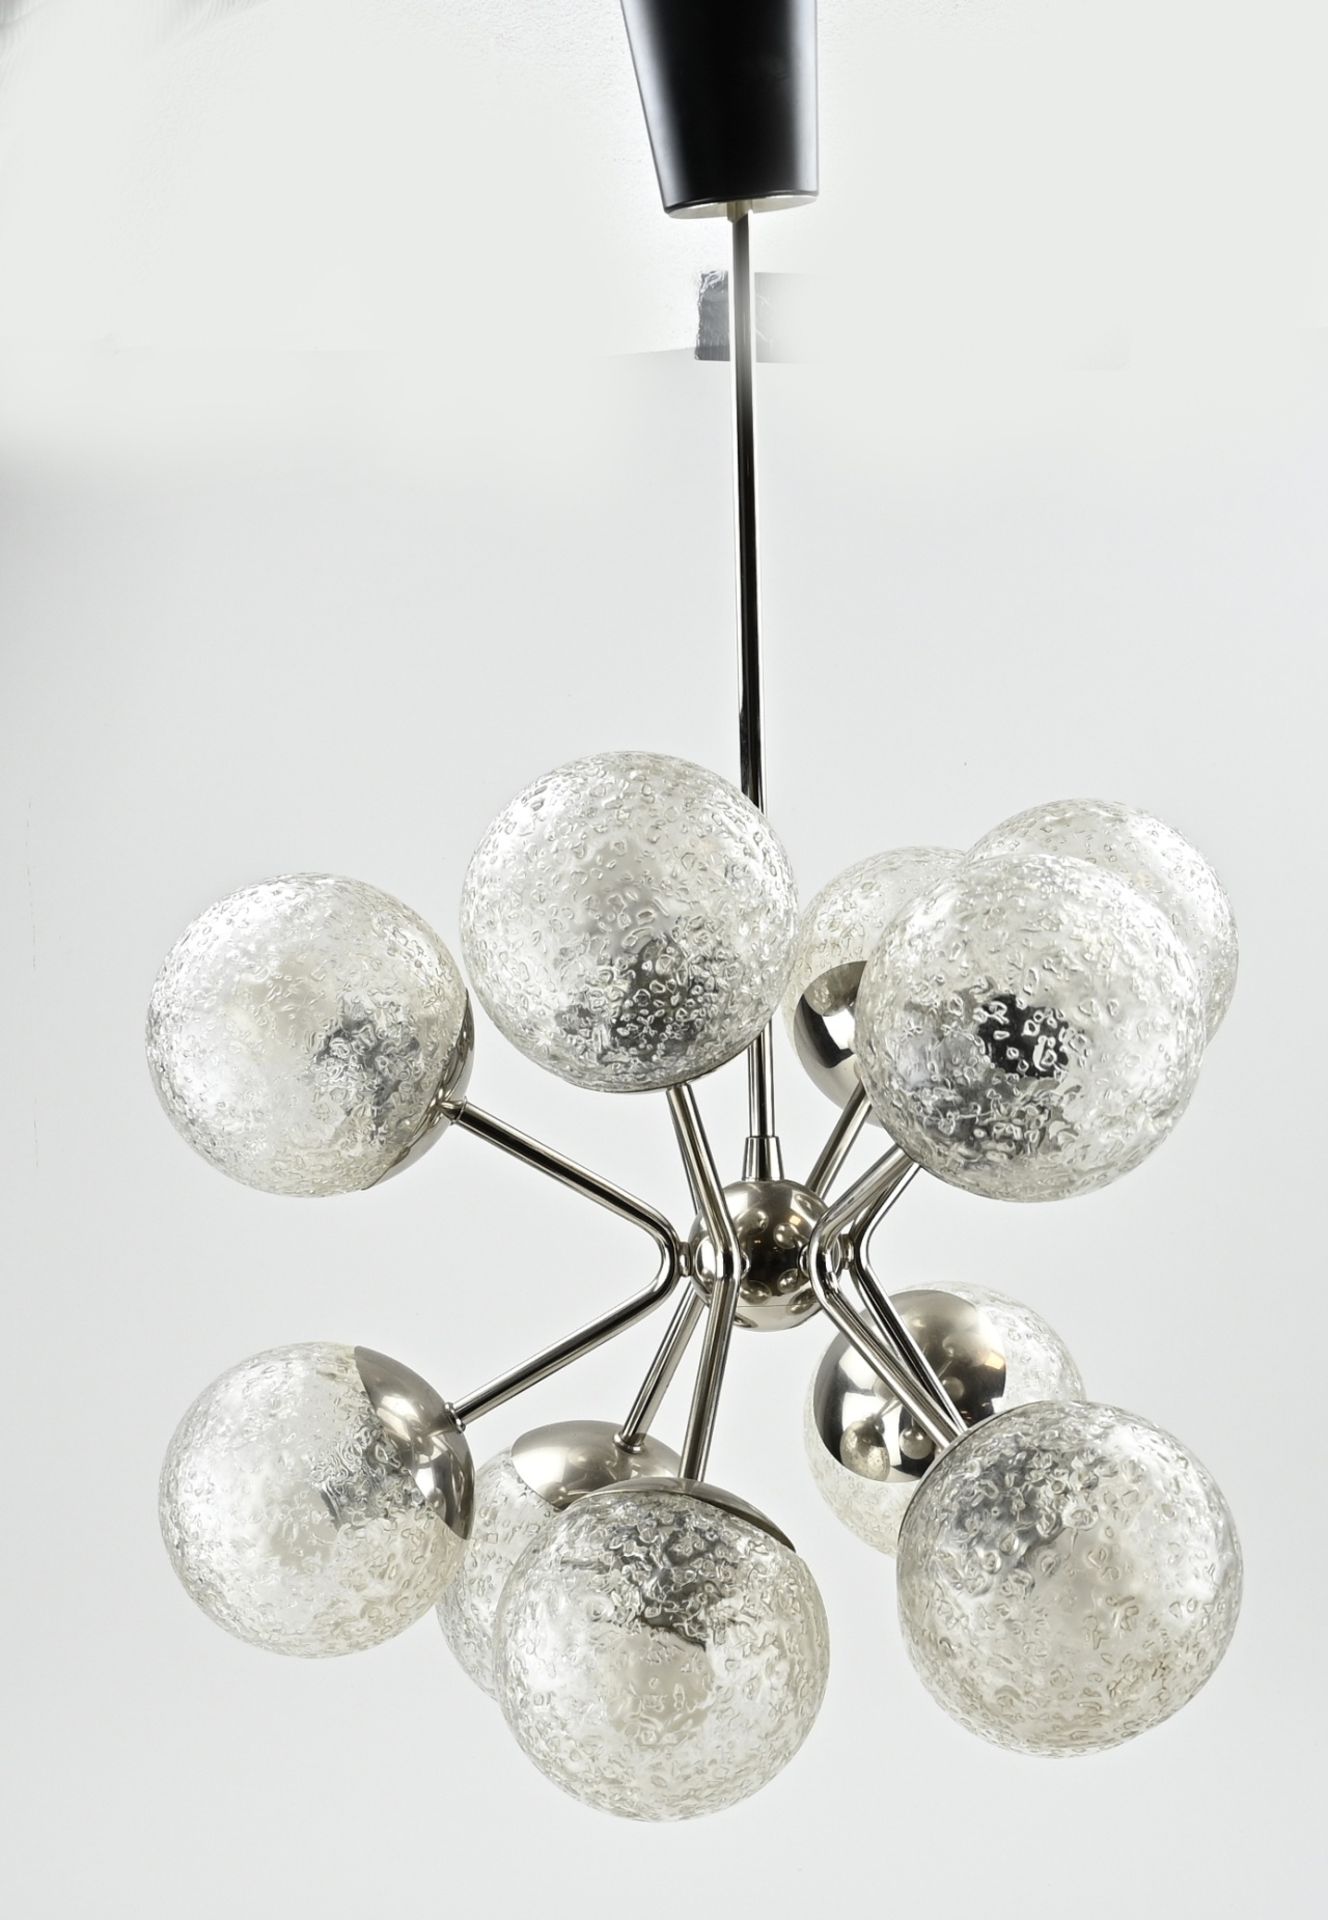 Design lamp with bulbs